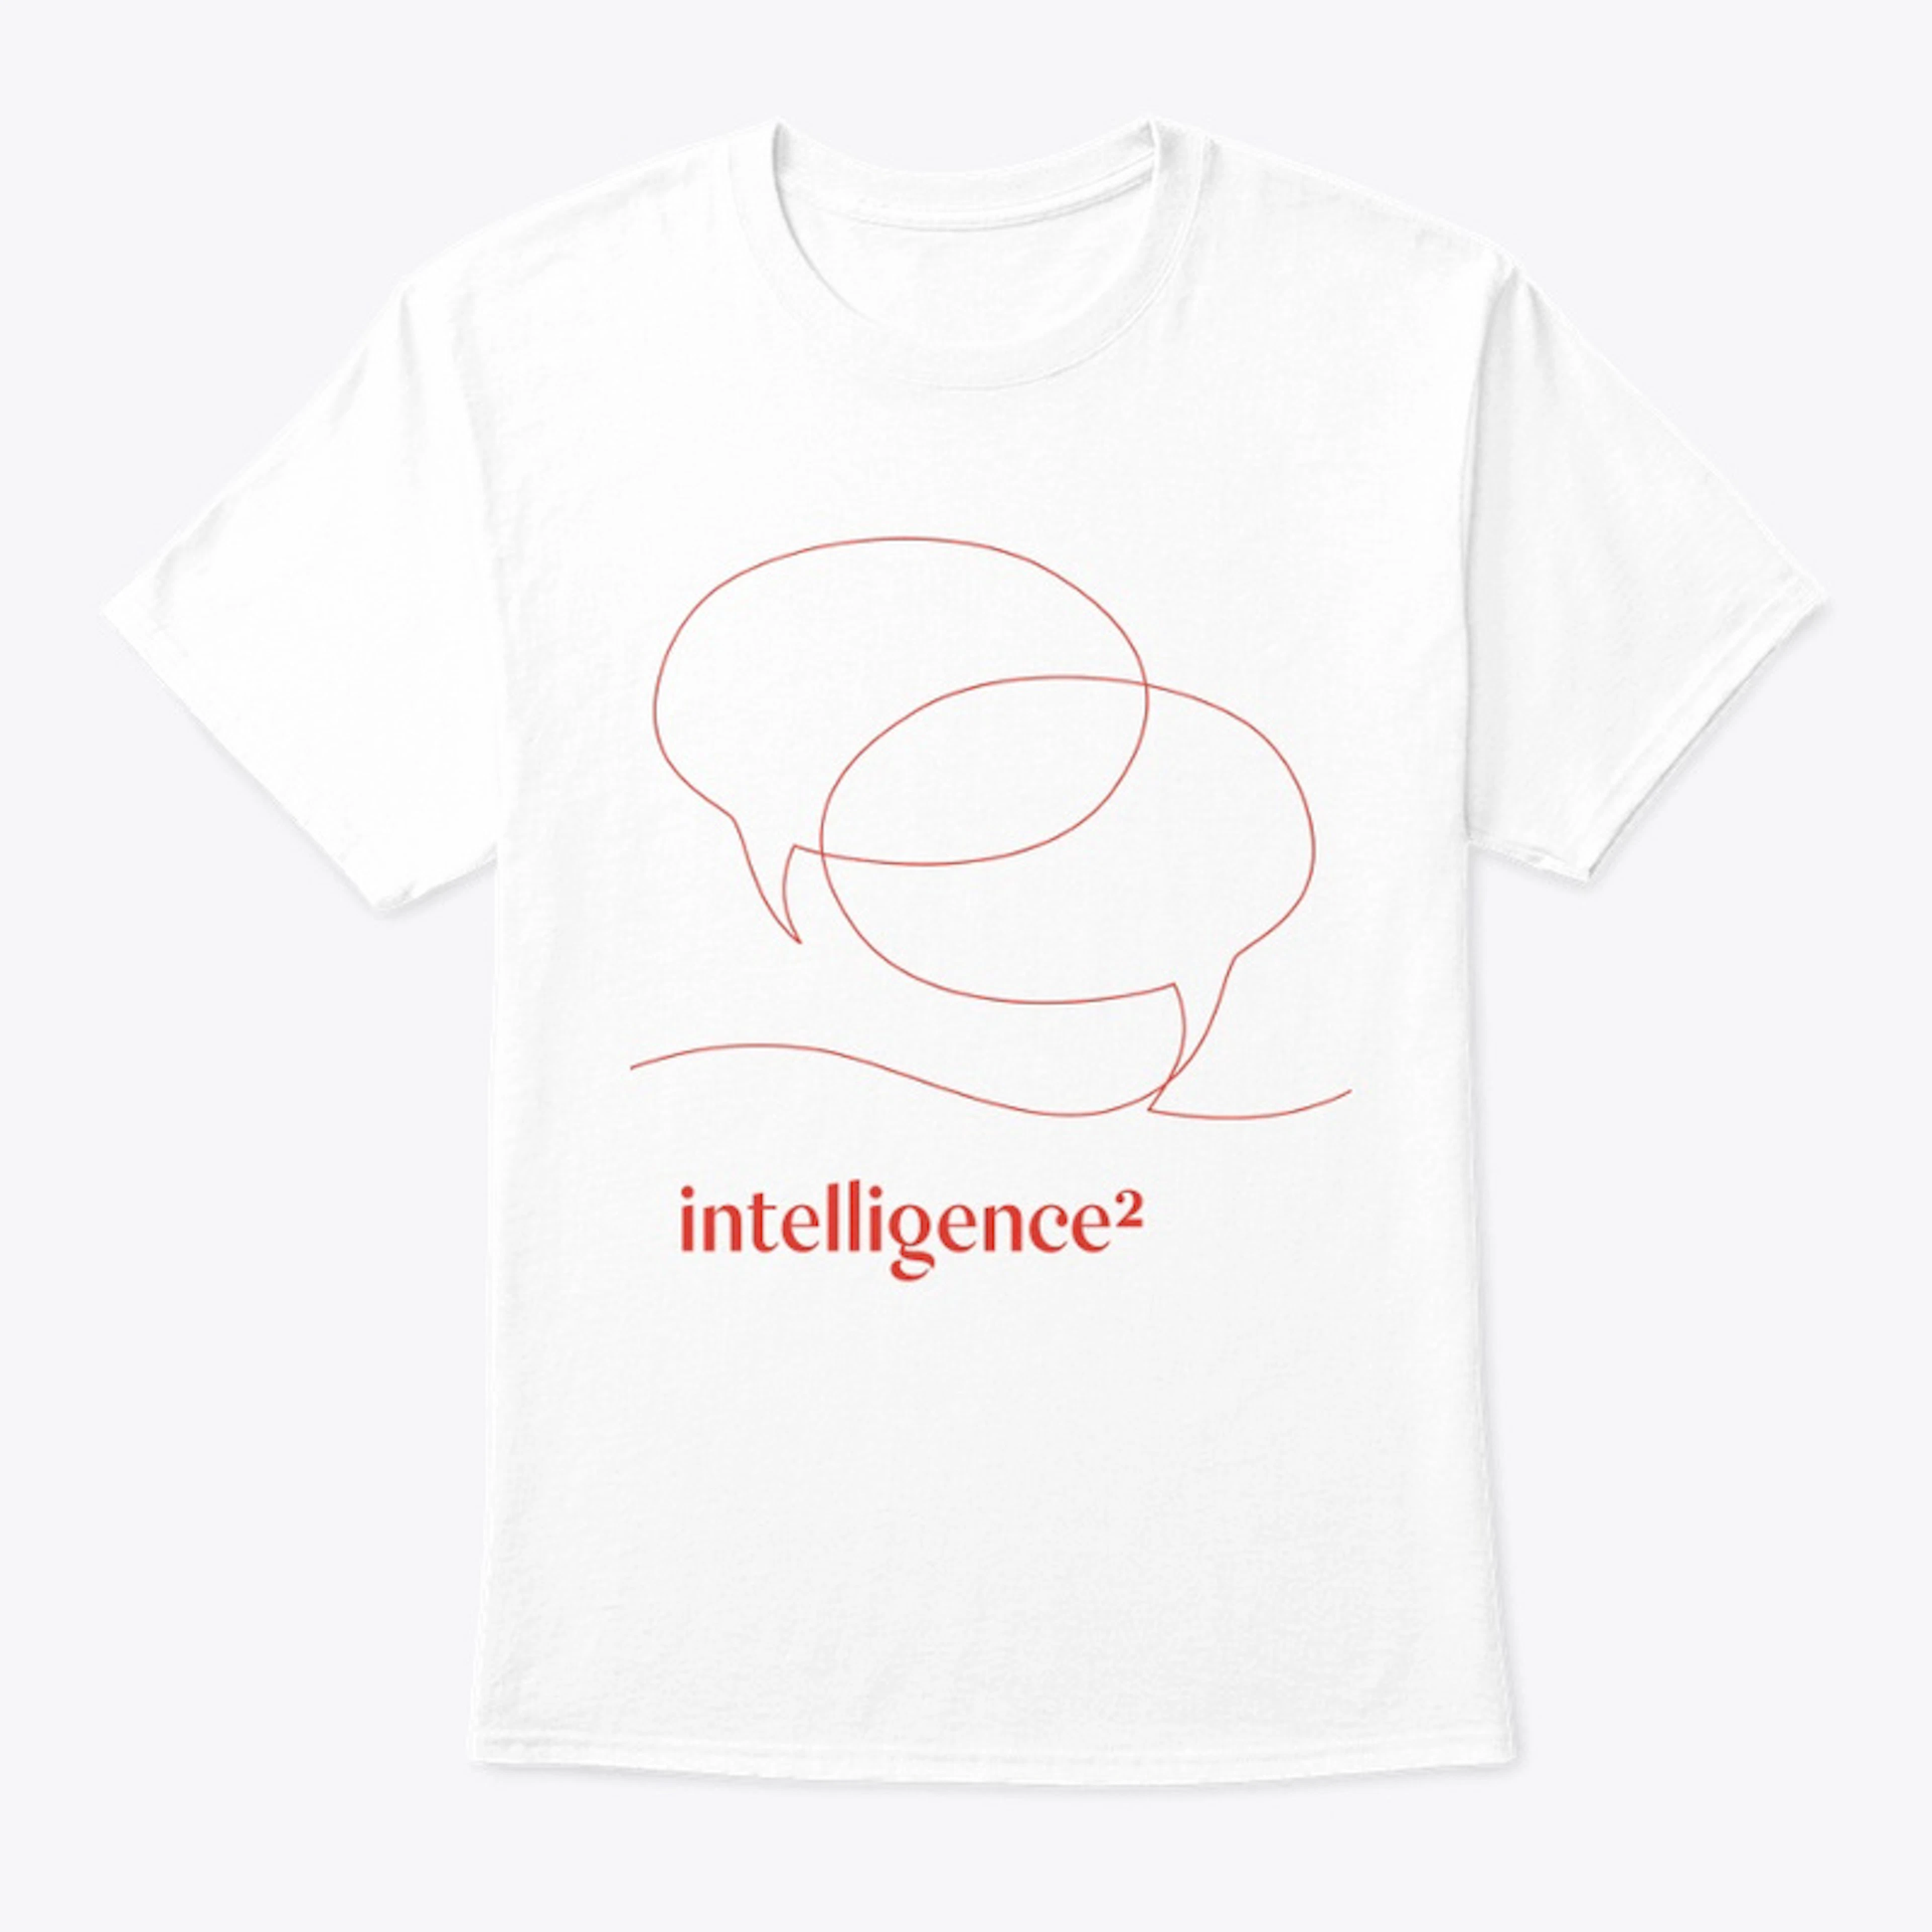 Intelligence Squared T-shirt - Red print